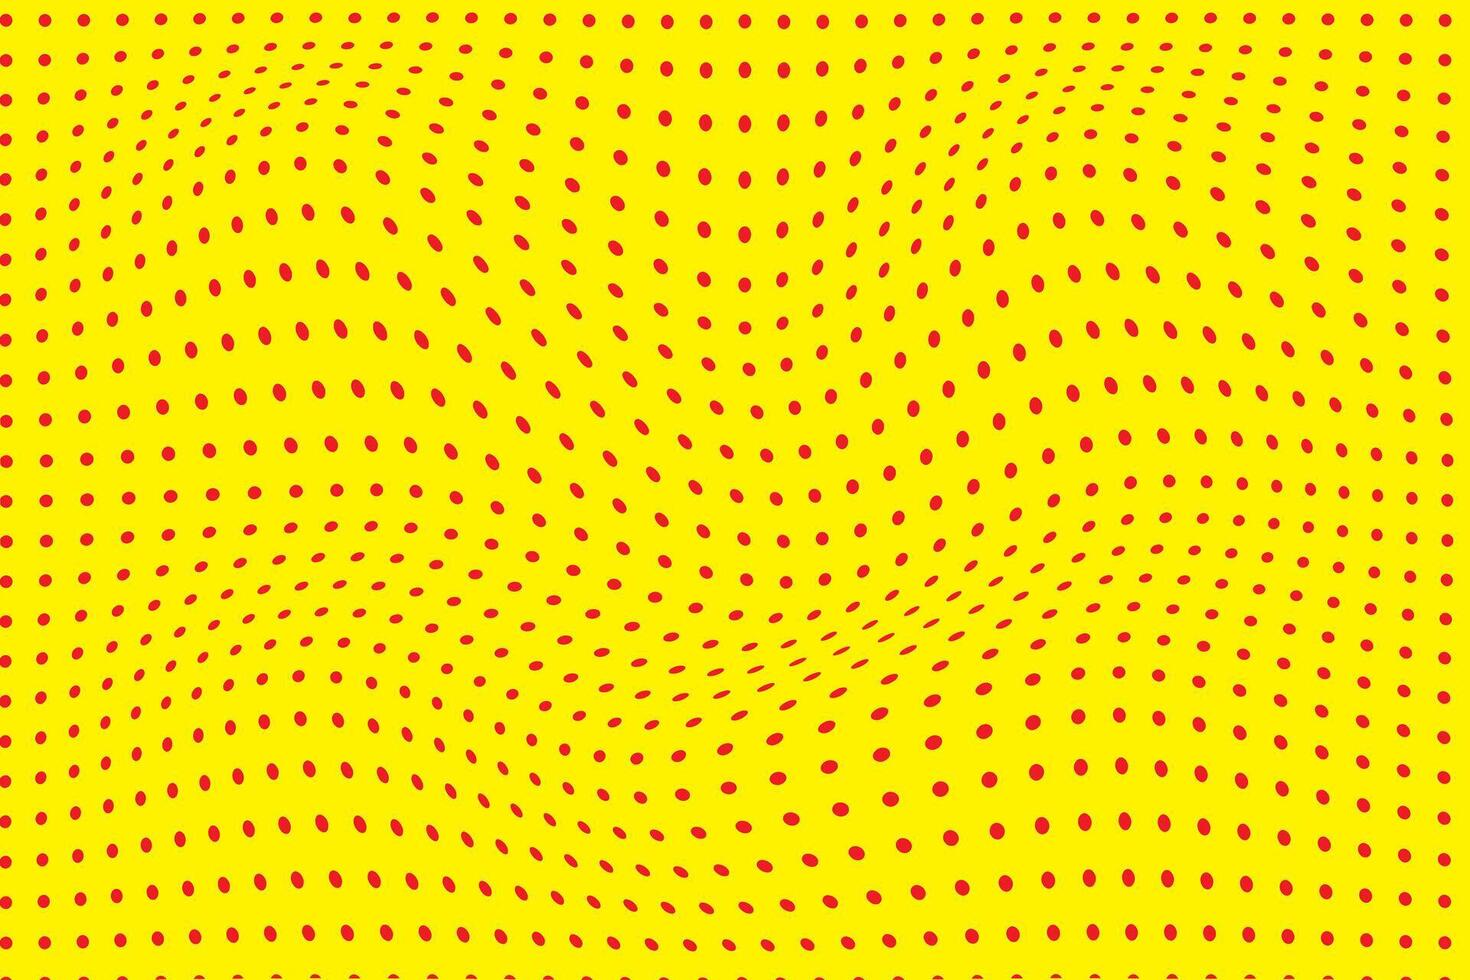 moderno sencillo resumen rojo color pequeño polca punto ondulado distorsionar modelo en amarillo antecedentes. vector